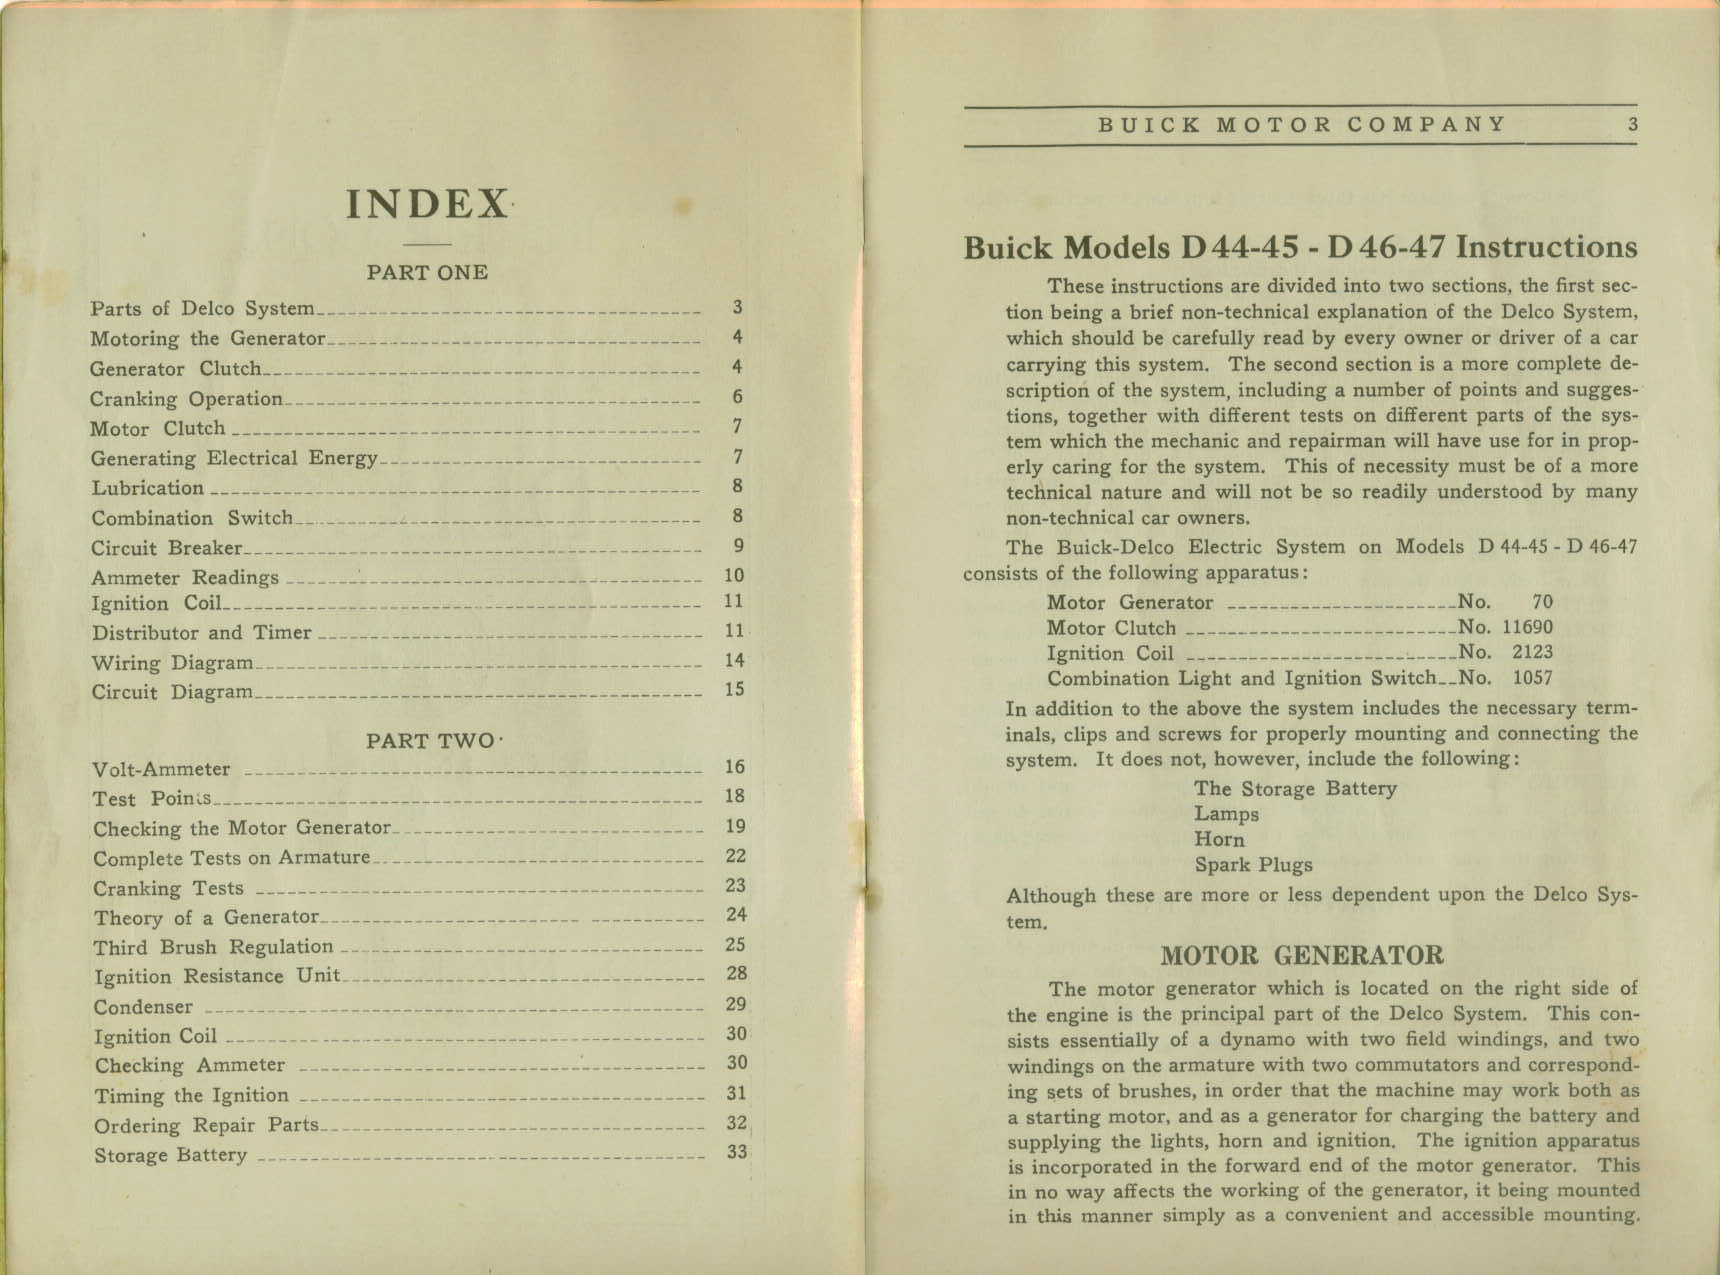 1916 Buick Delco Instruction Book-02-03